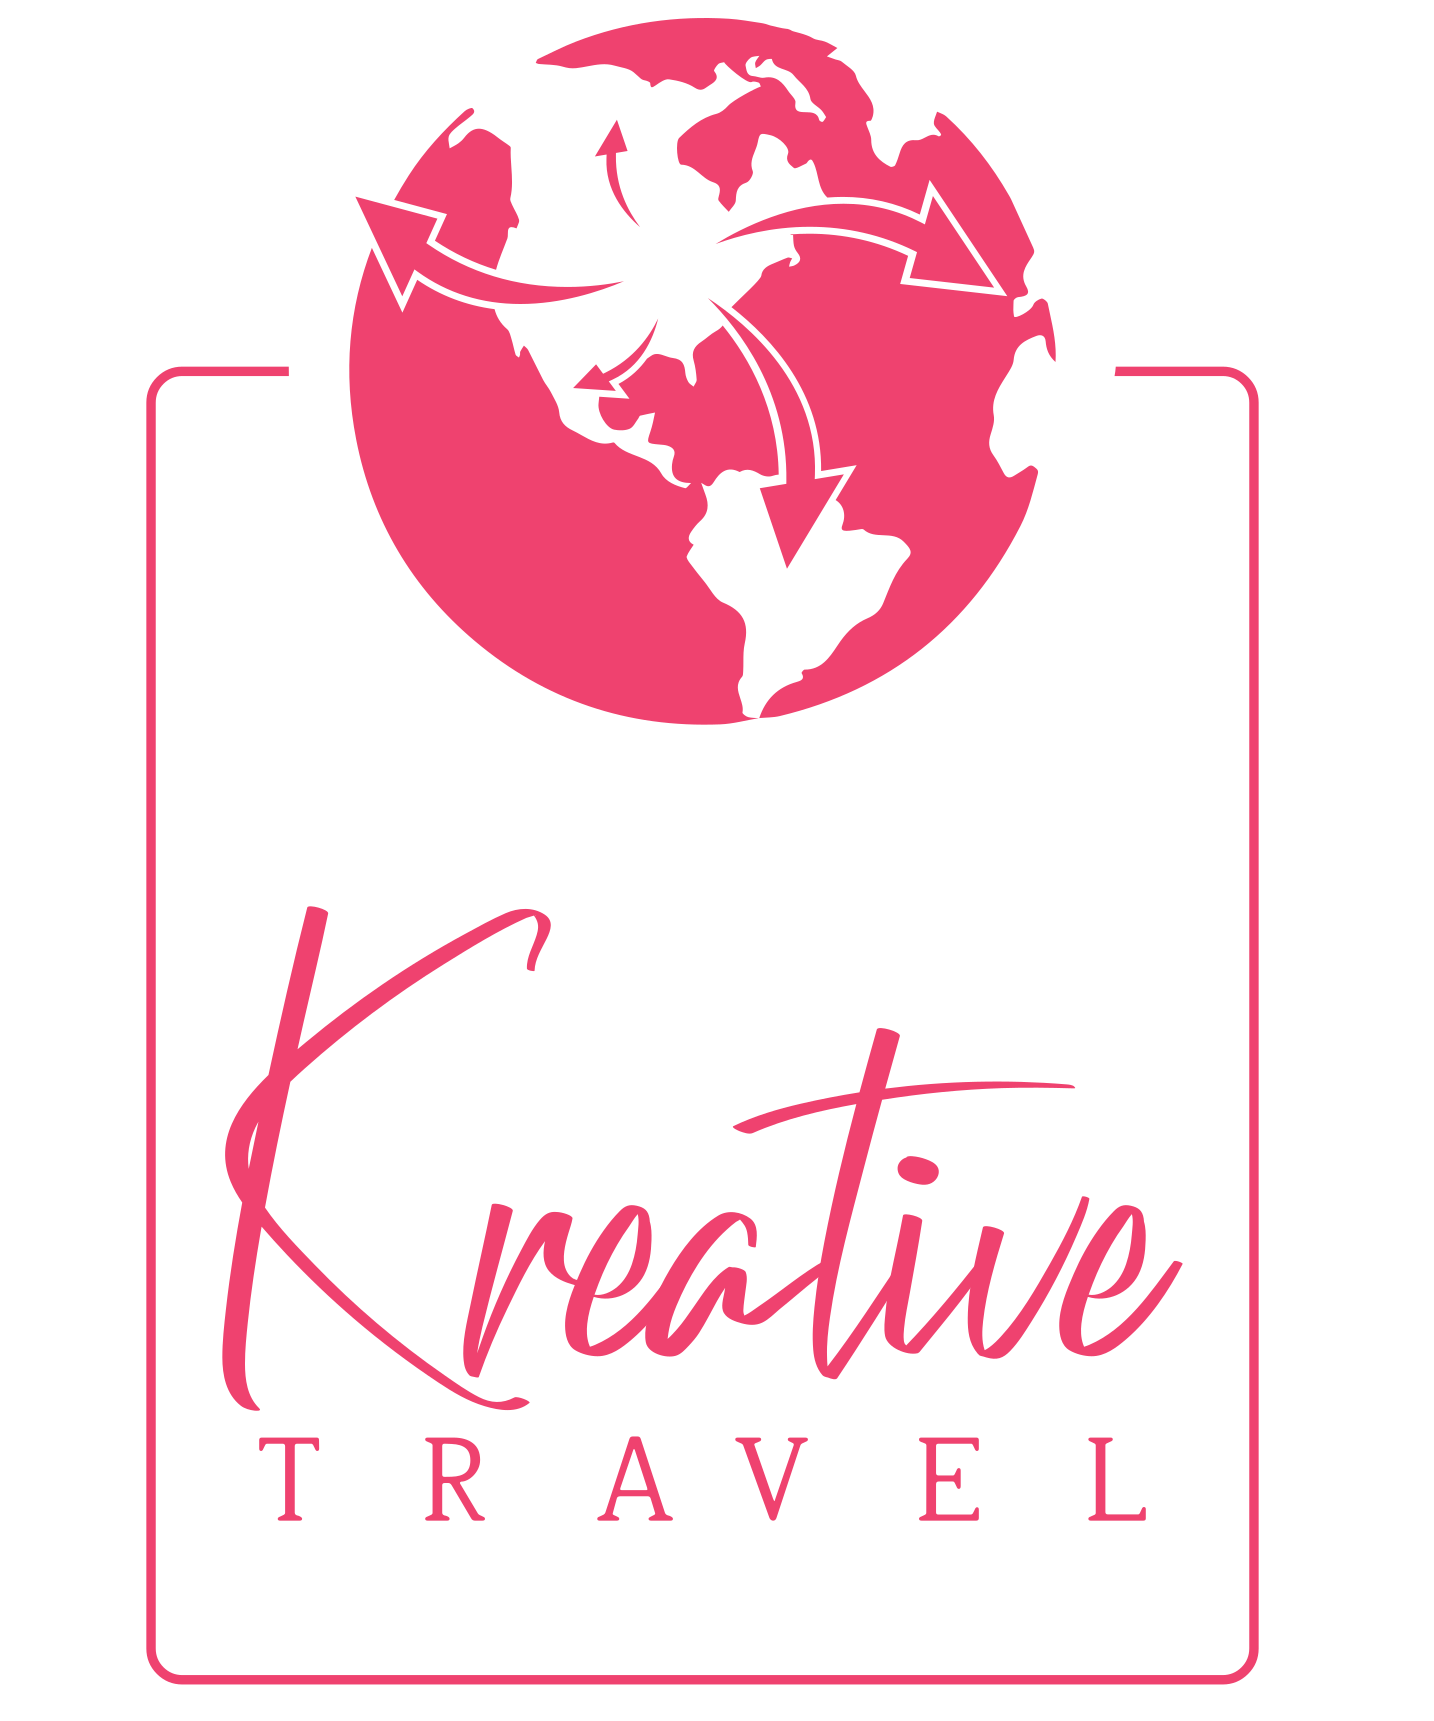 Kreative Travel